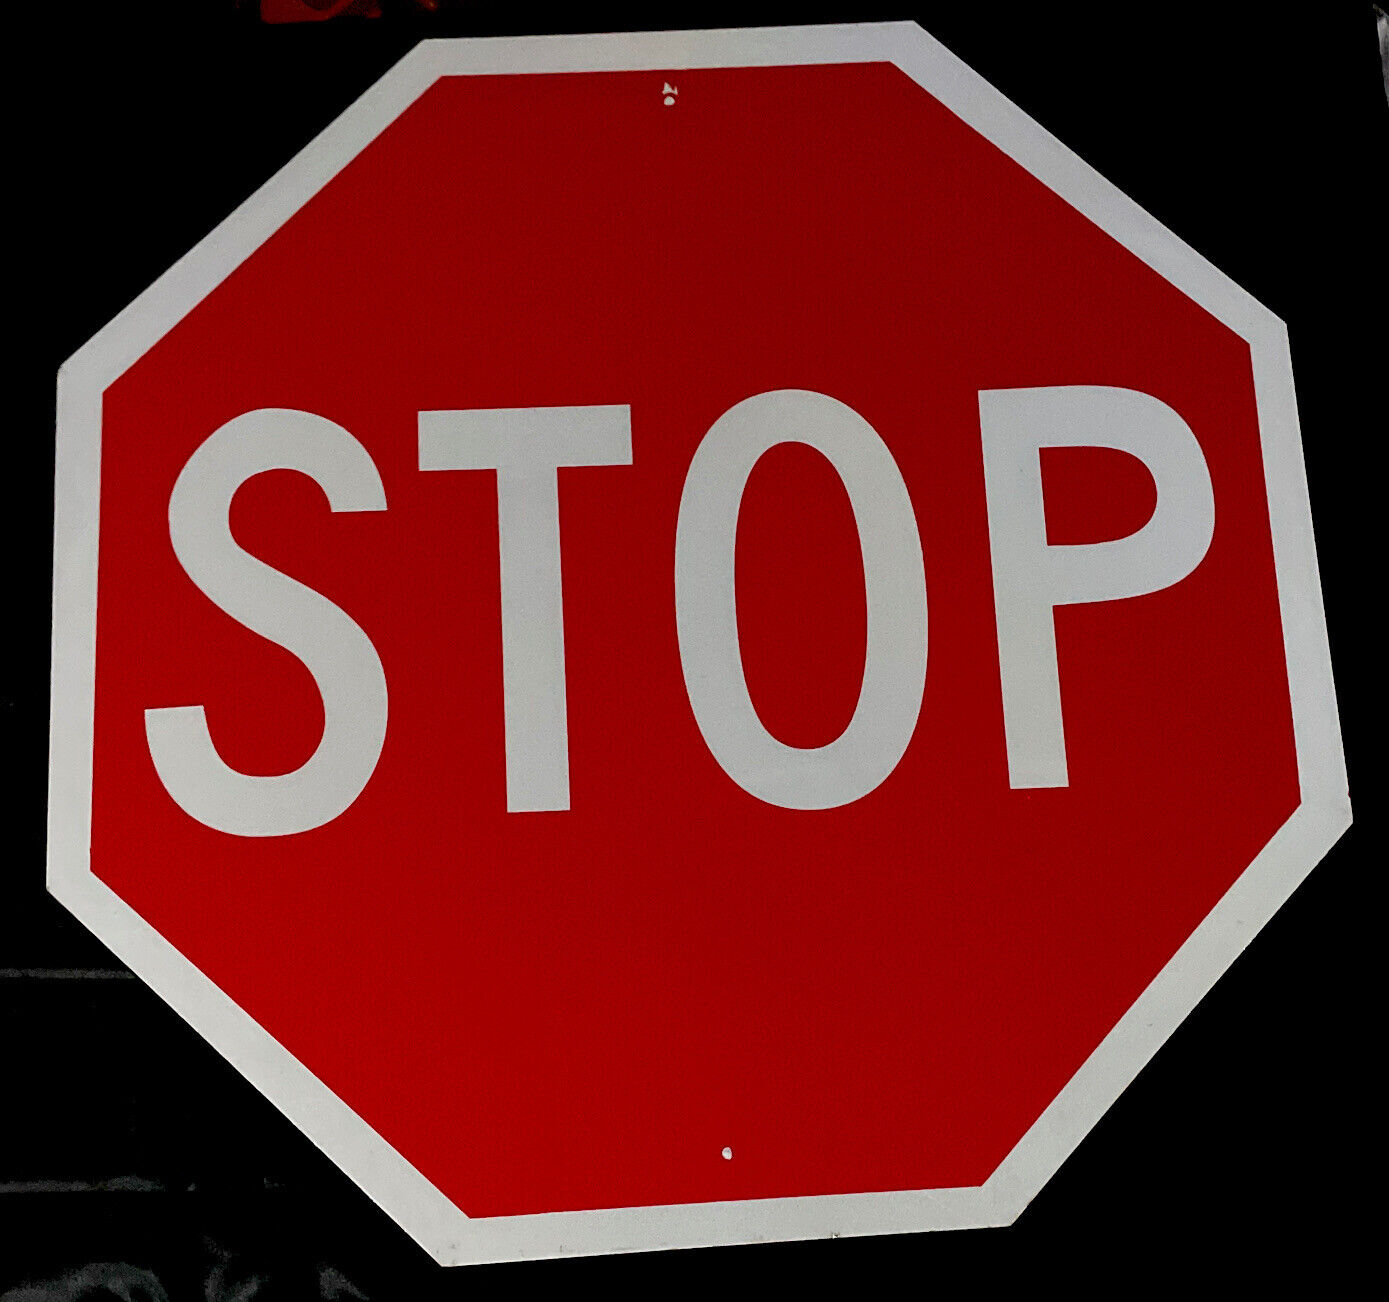 30” STOP HEAVY SIGN GAS OIL PUMP STREET CAR TRUCK  TRAFFIC